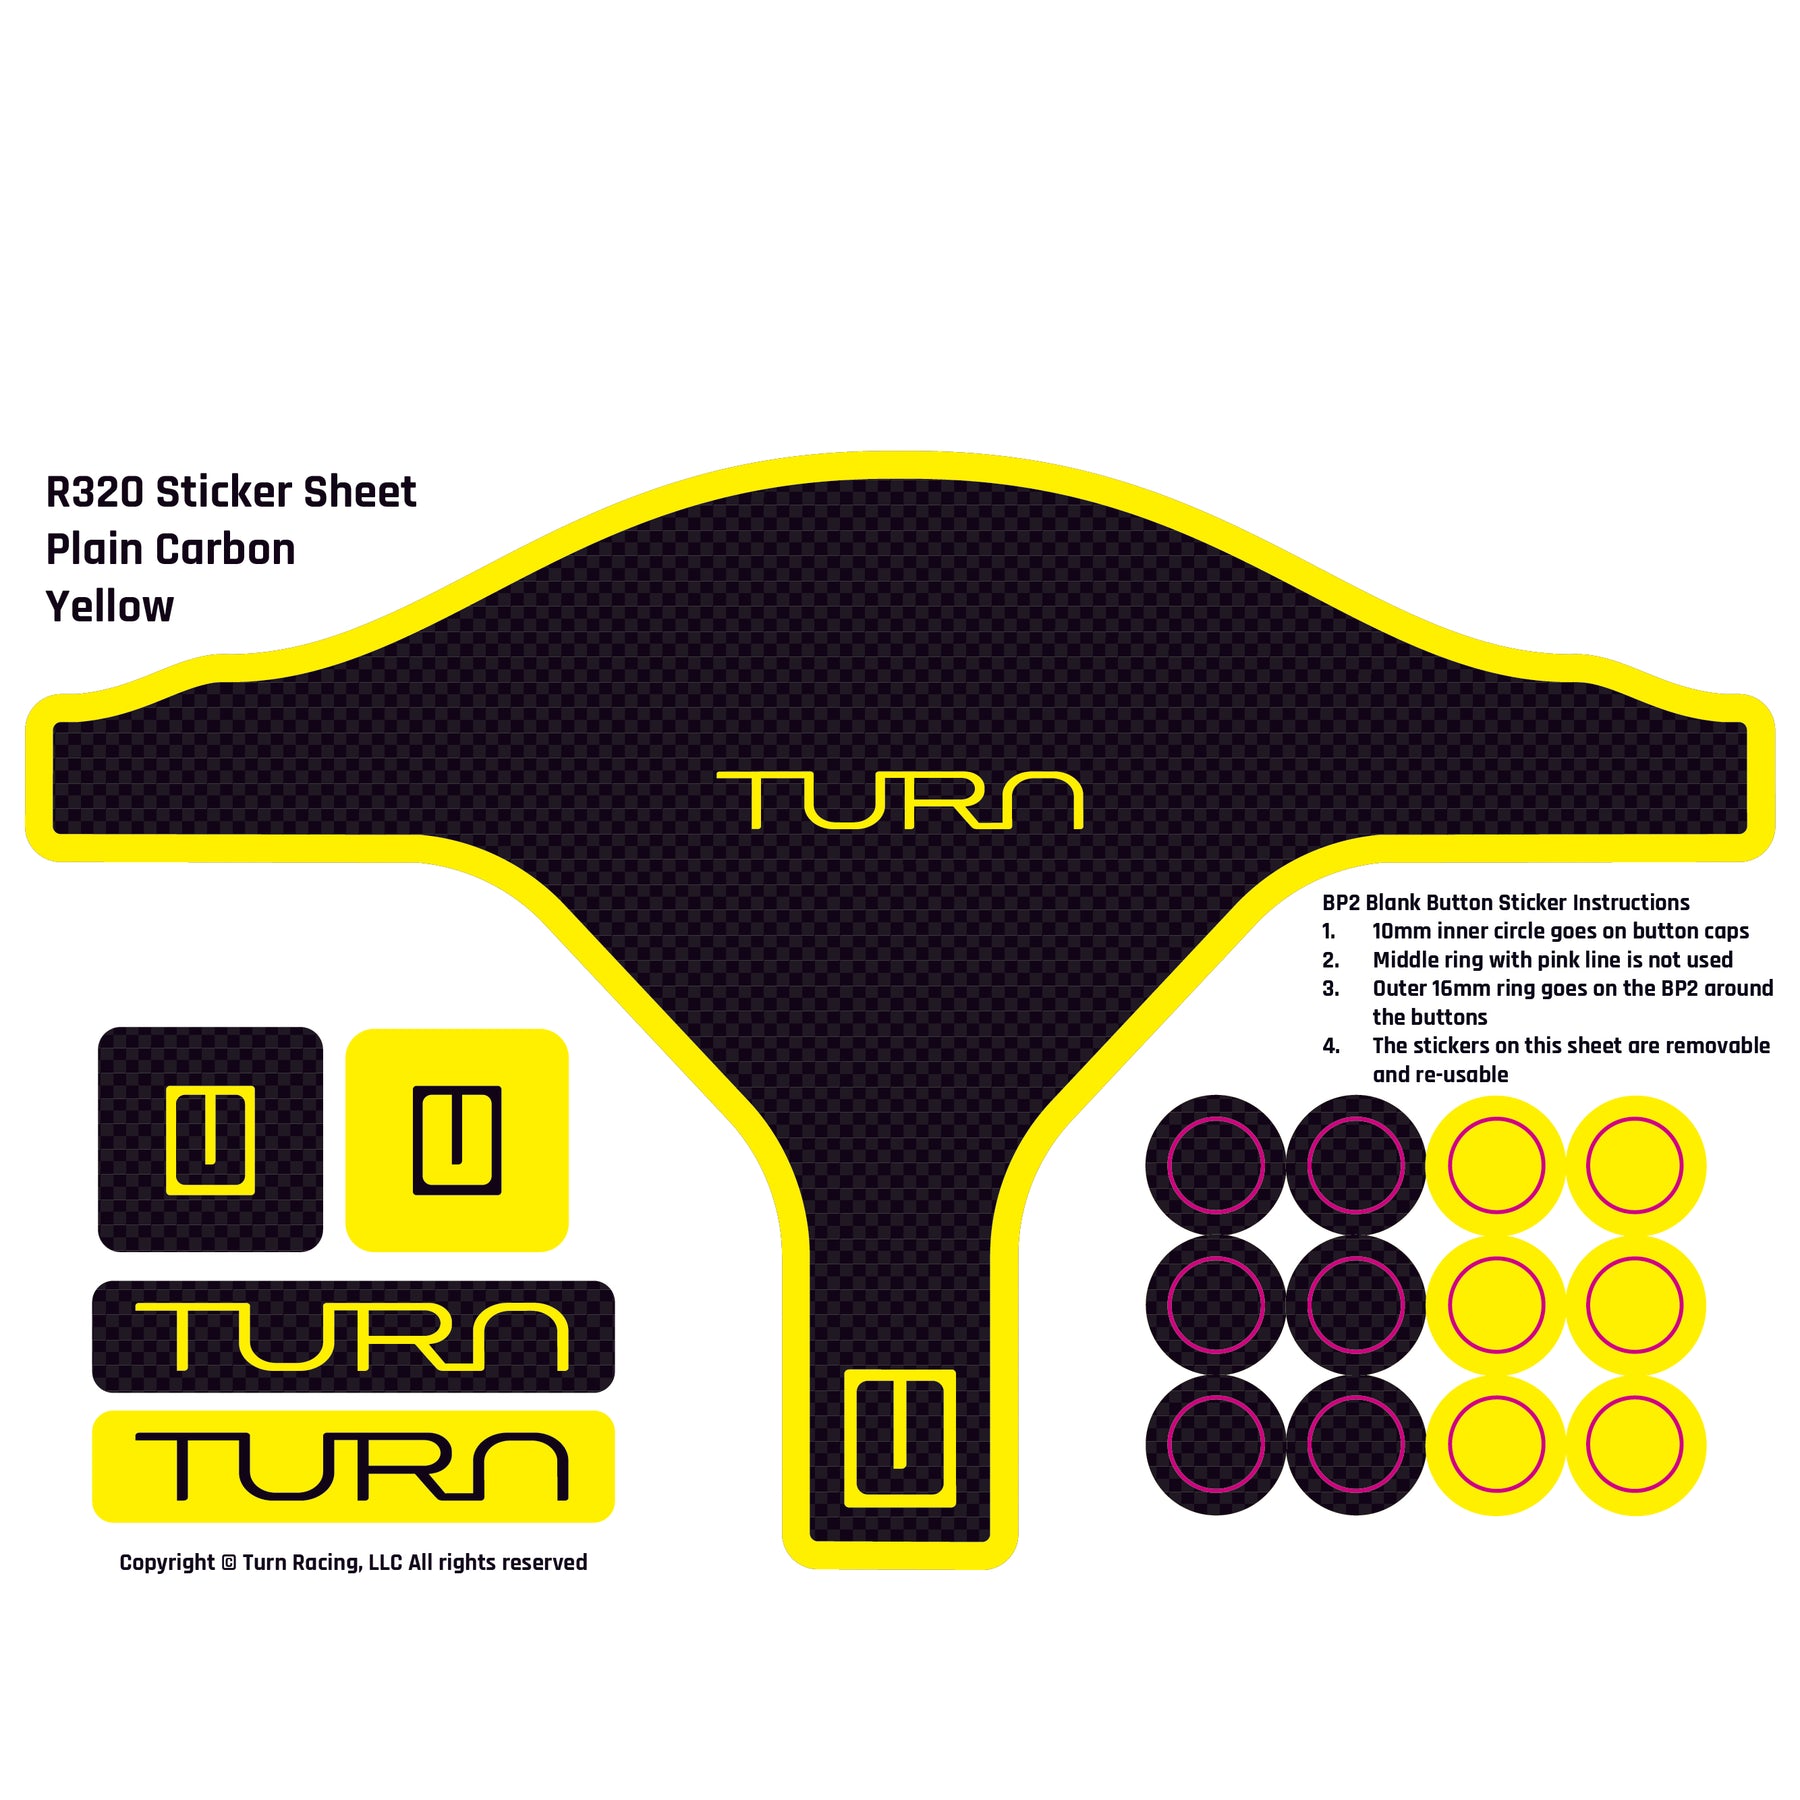 Turn R320 Sticker Sheet - Plain Carbon Yellow